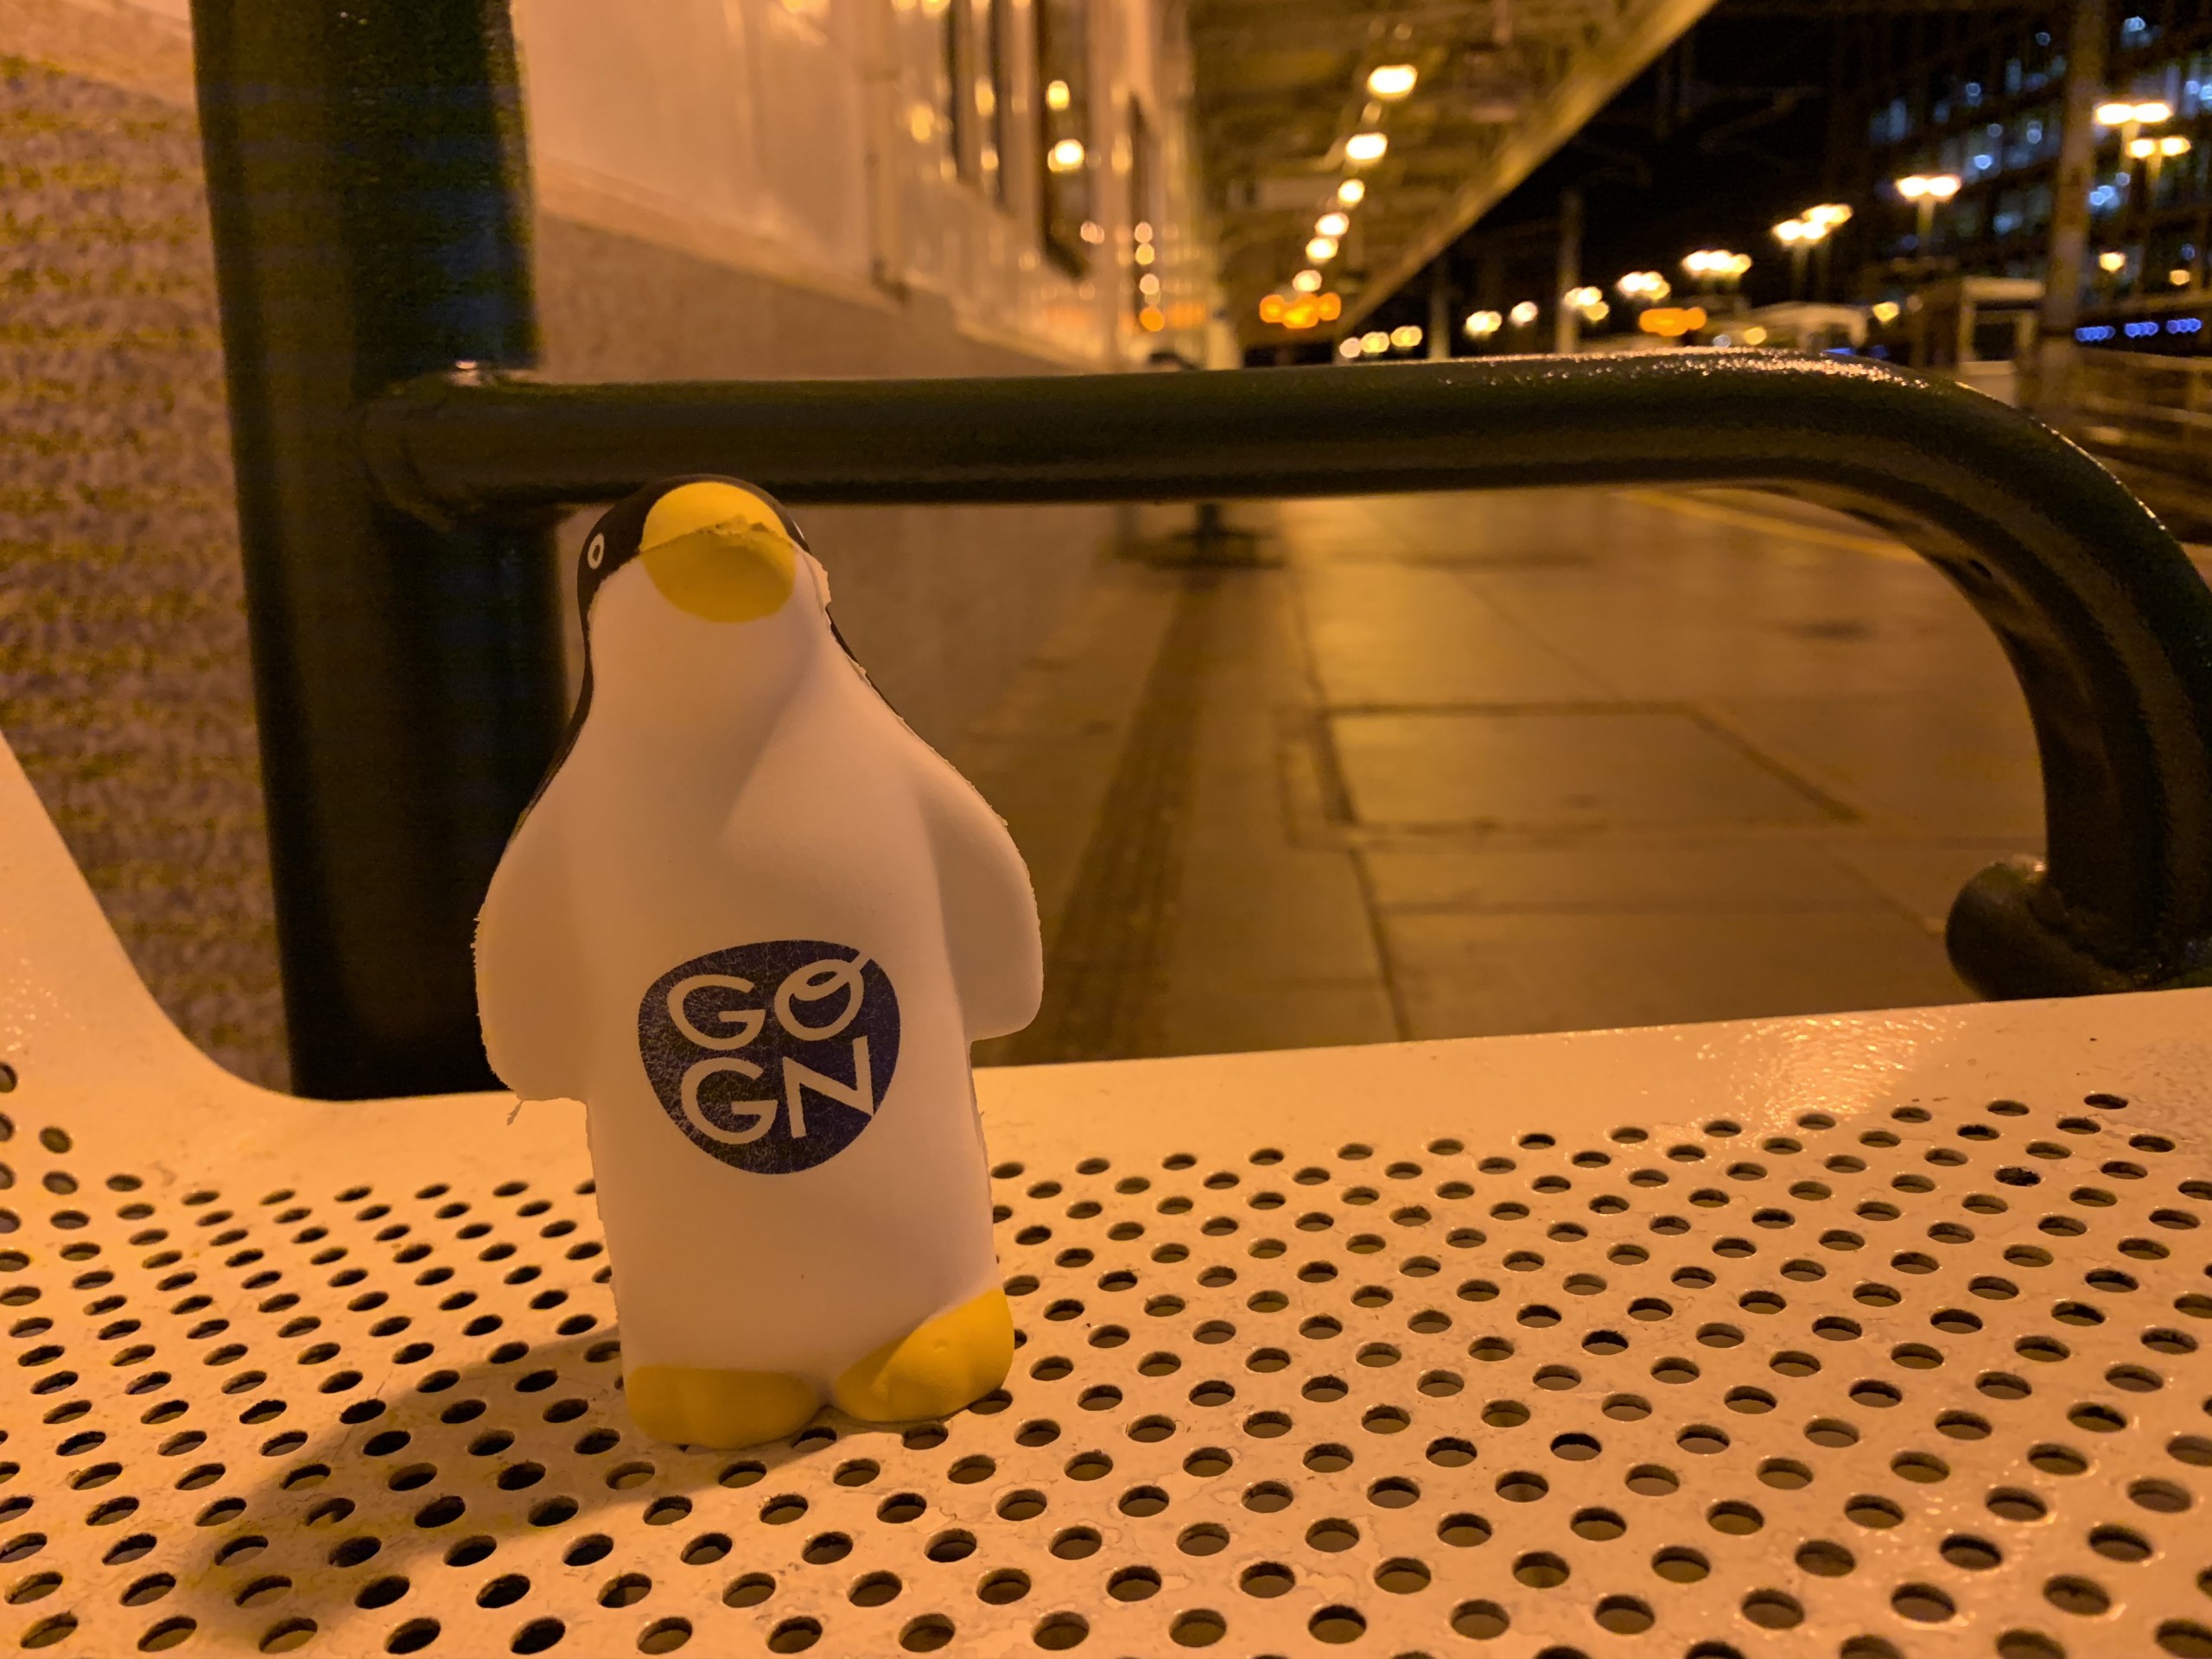 GO-GN Toy penguin on a train platform